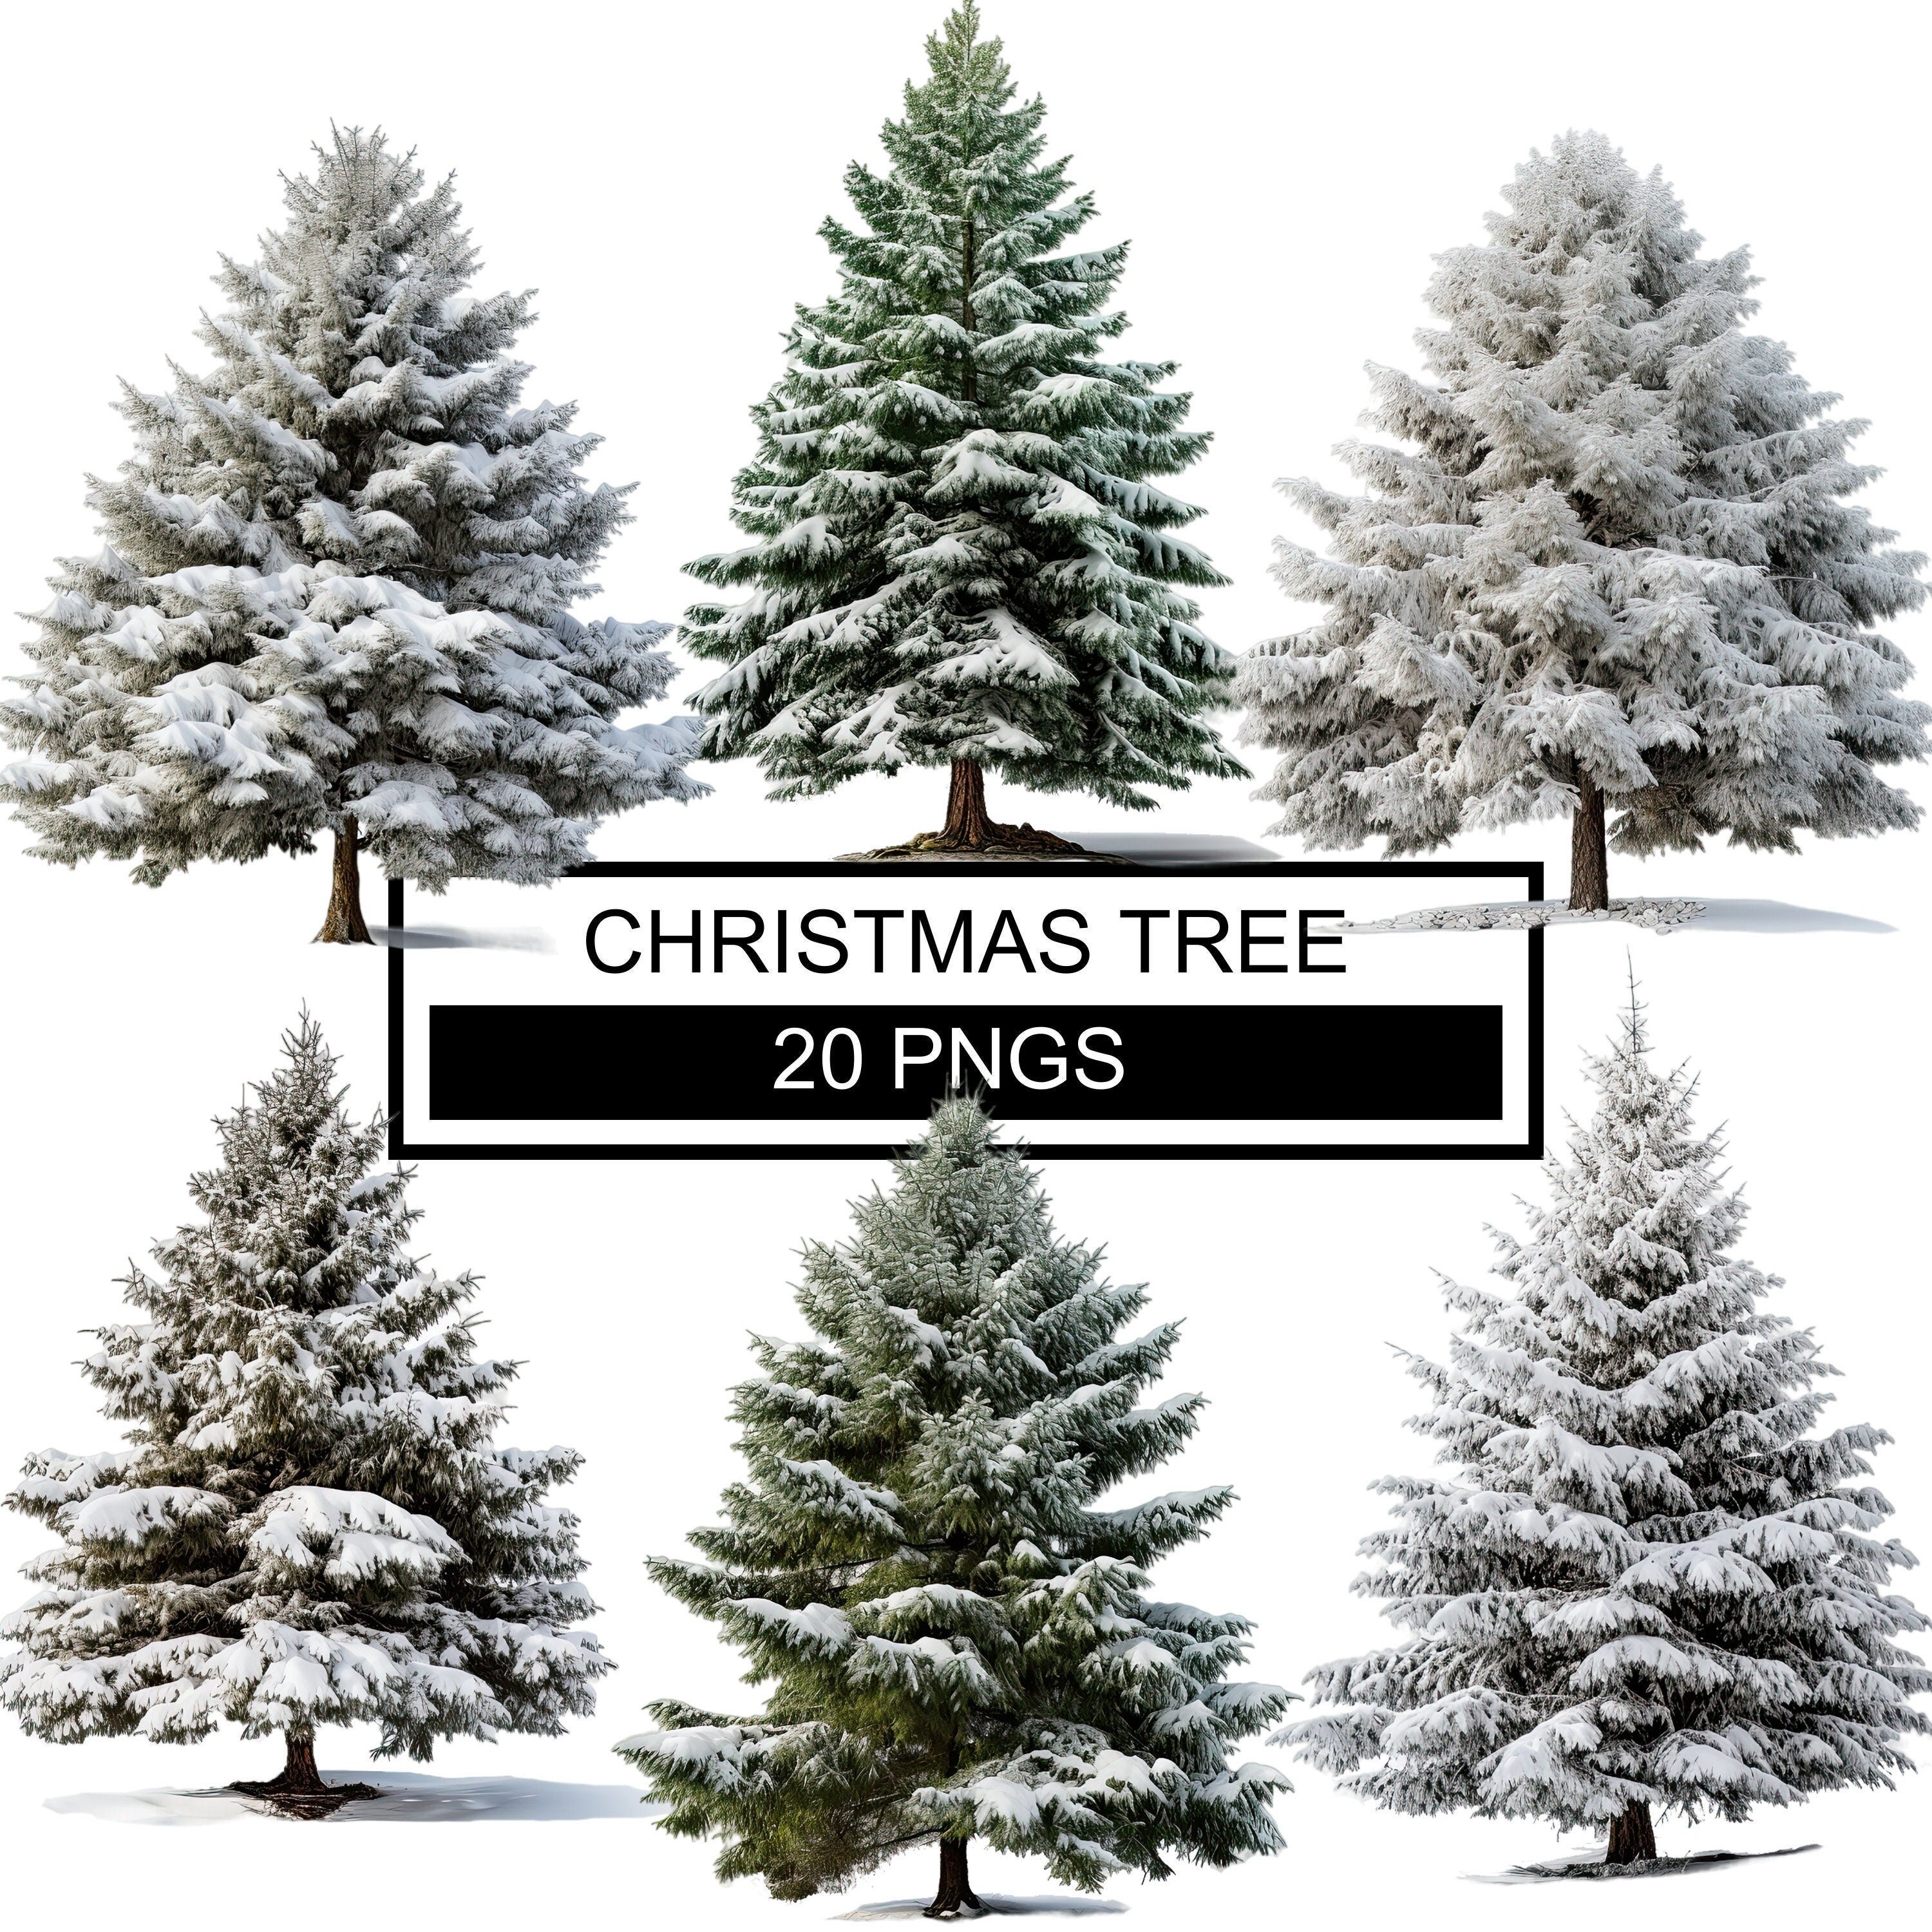 Snowy Tree Clipart, Christmas Tree Clipart, Watercolor Christmas Tree Clipart, Christmas Tree Png,Evergreen Tree Png,Tree Clipart Watercolor